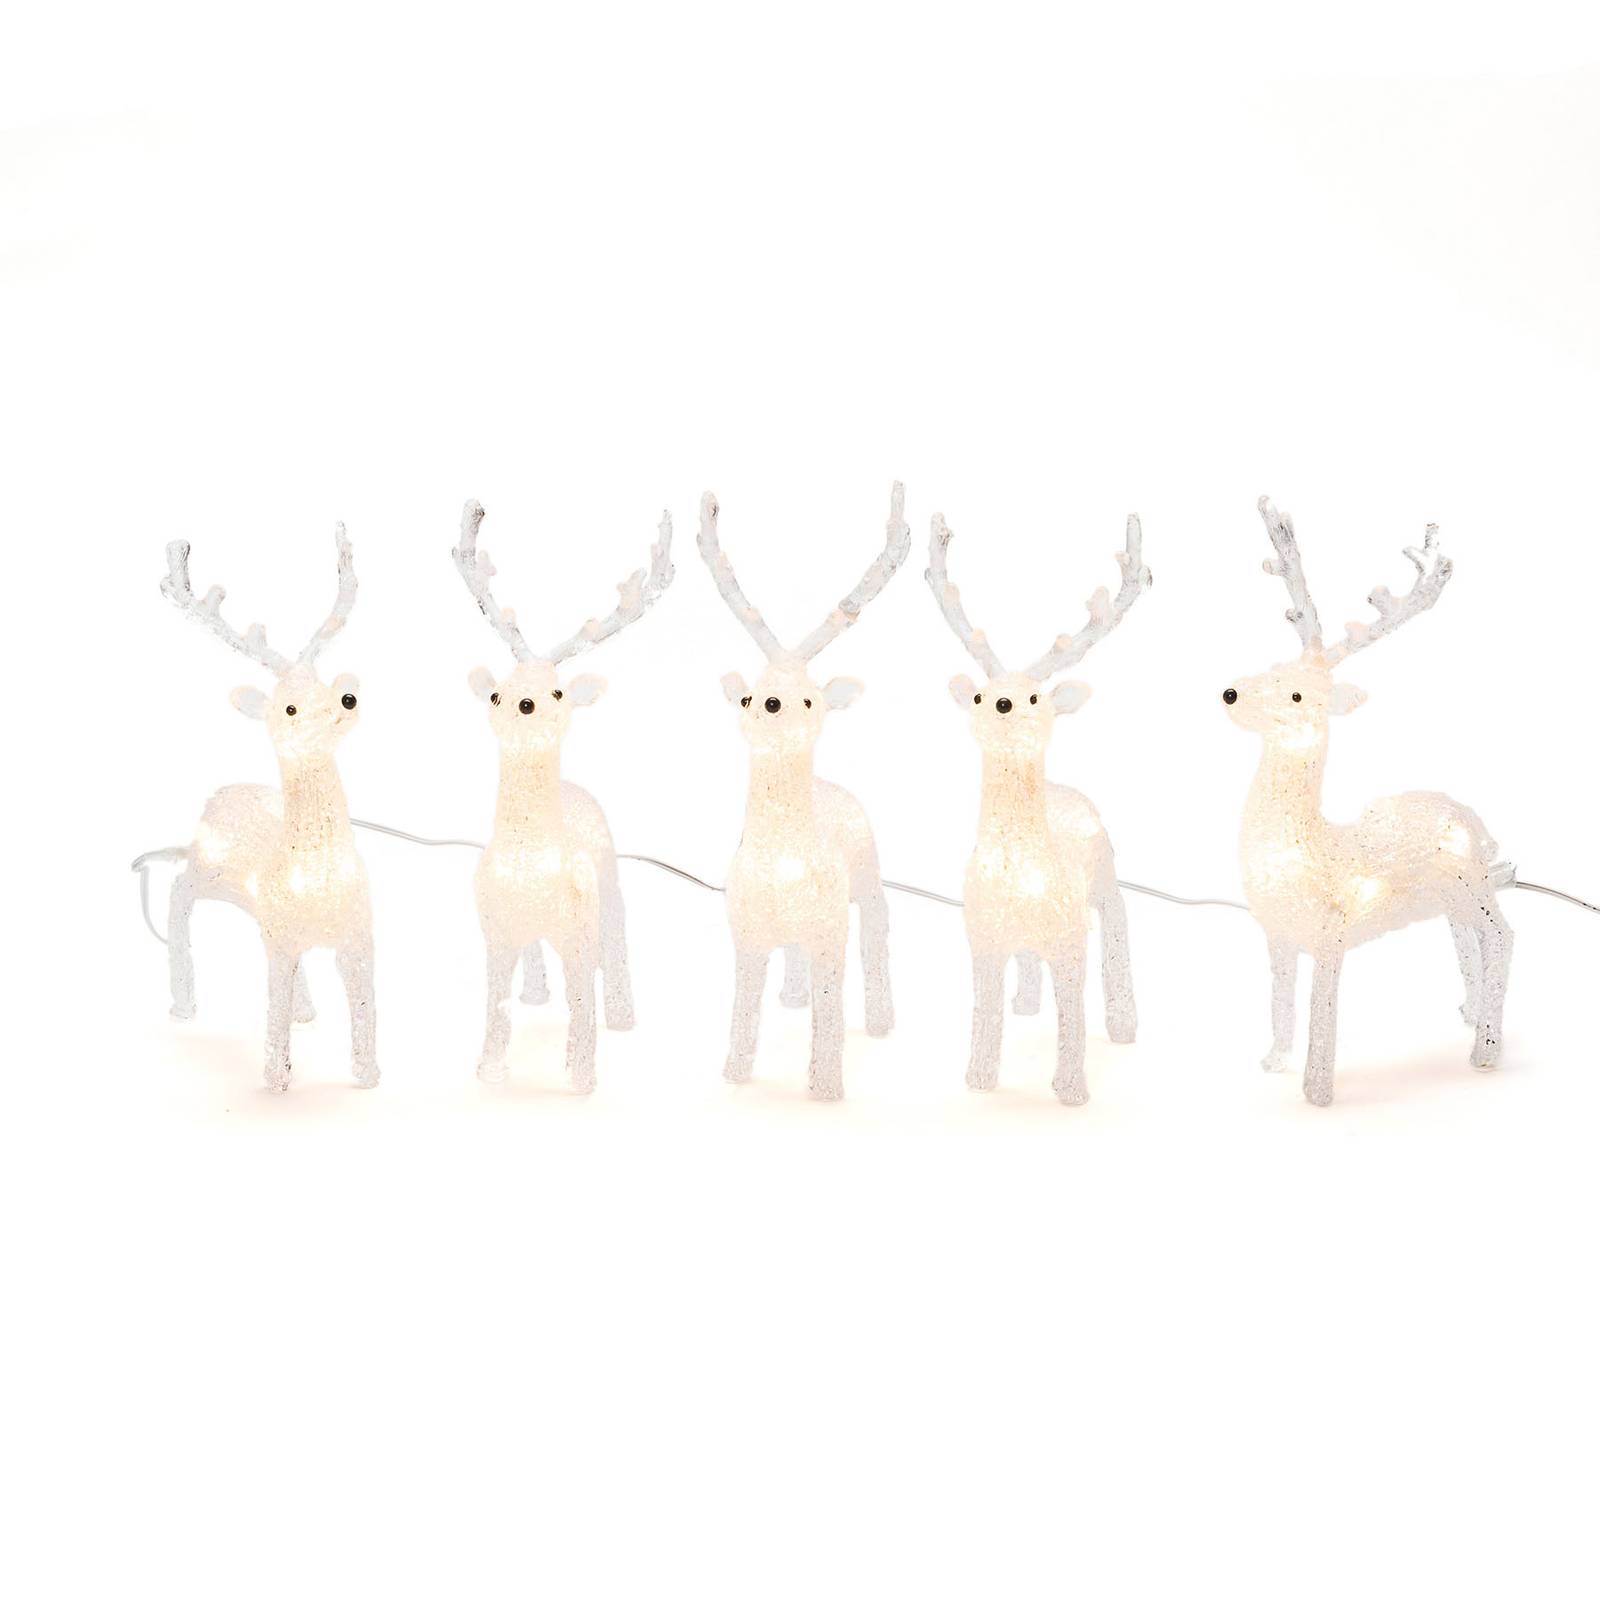 Konstsmide Christmas LED-Leuchtfiguren Rentier für außen, 5er-Set